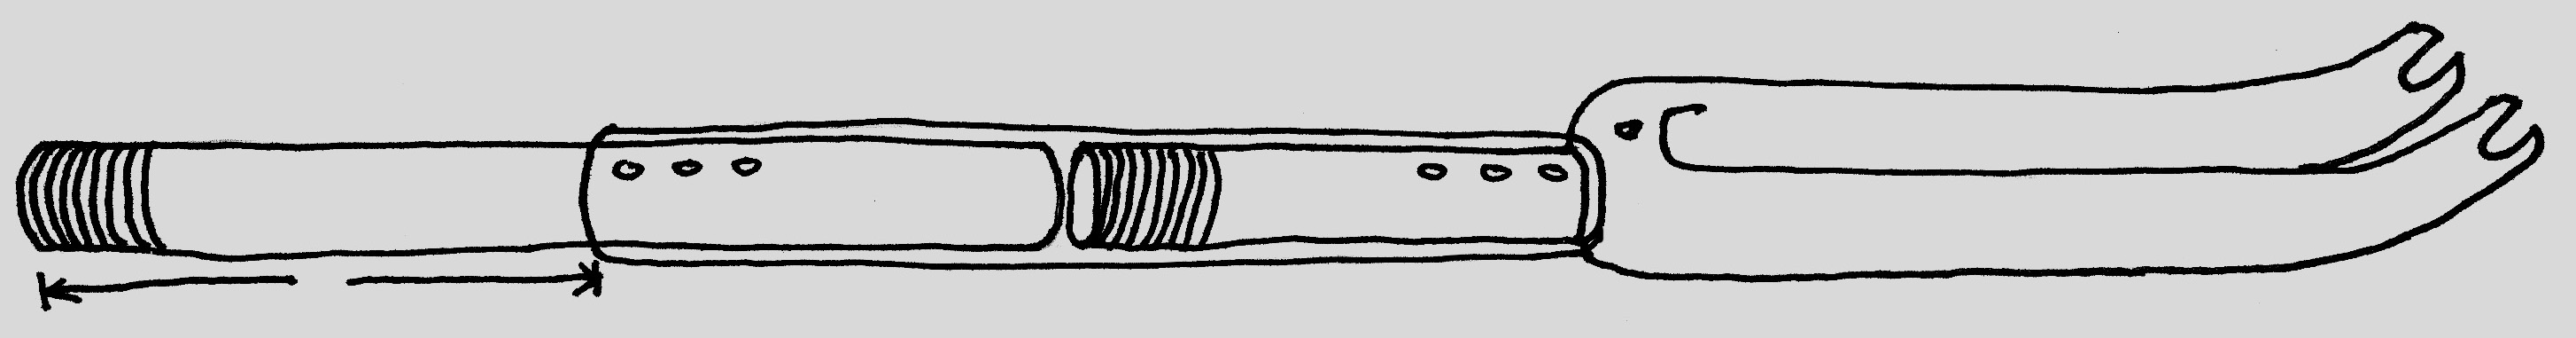 the monotube fork assembled